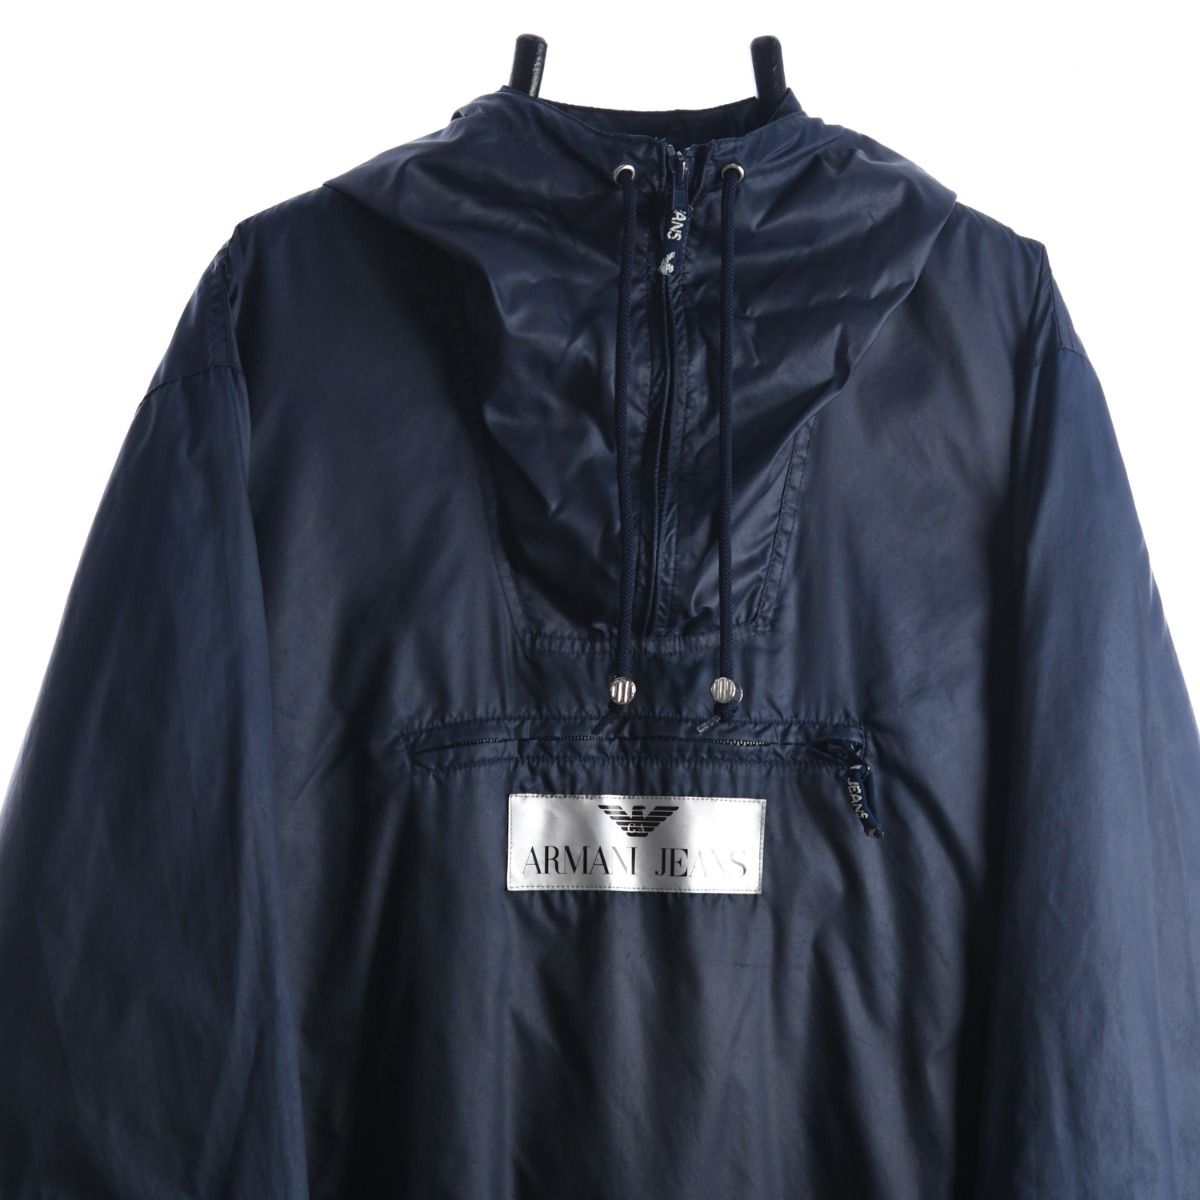 Armani Jeans 1990s Shell Jacket